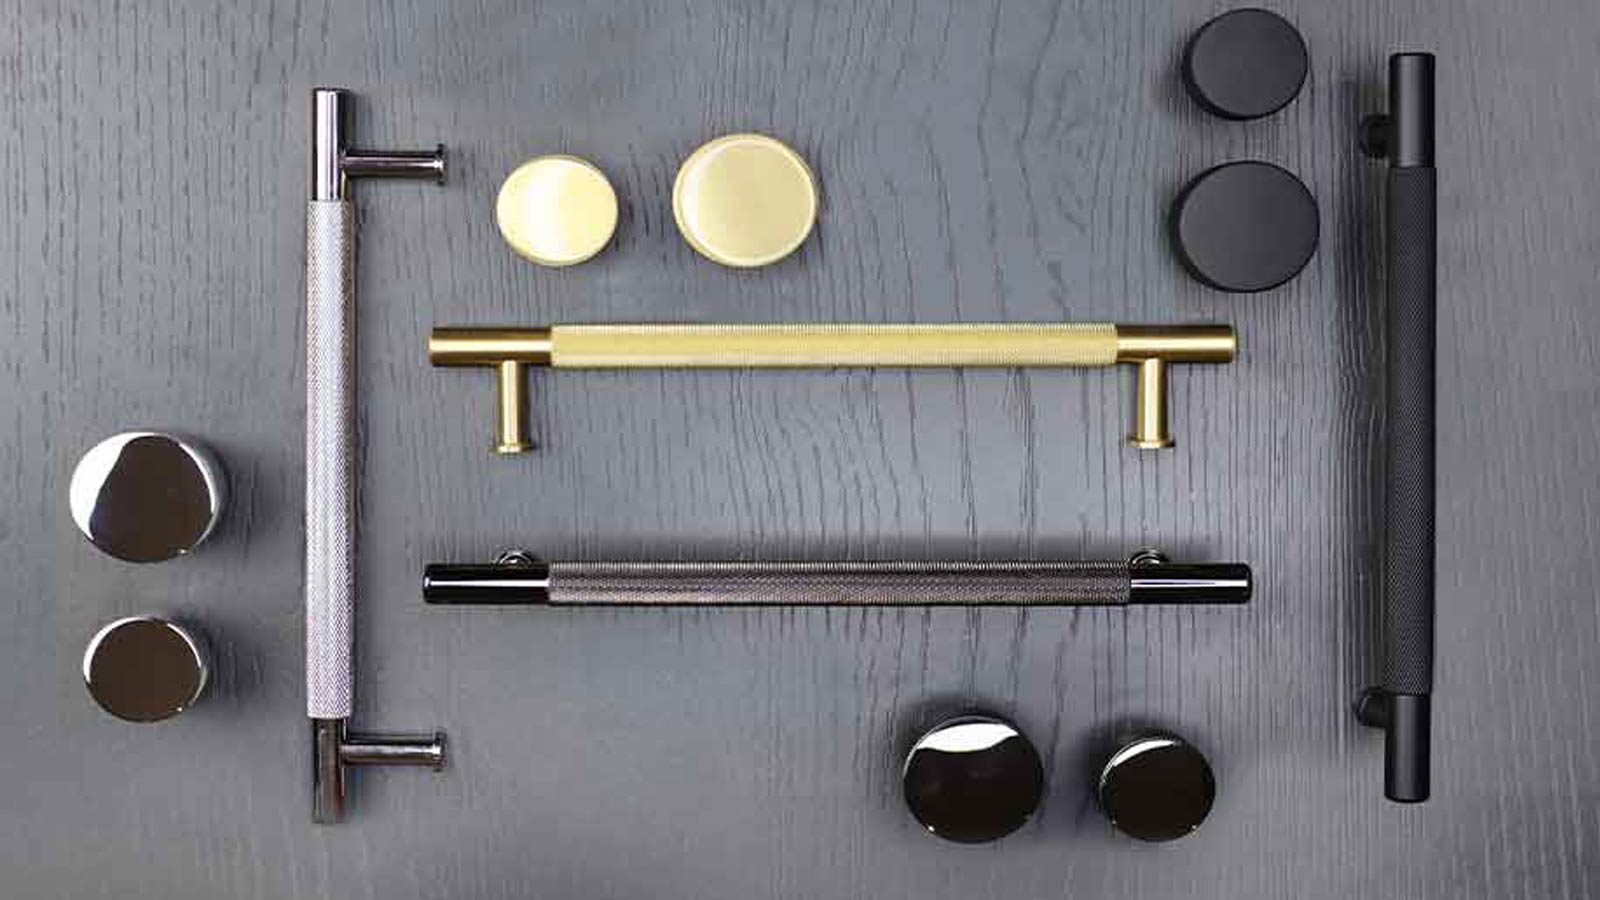 Knurled kitchen handles in metallic and black matt finish